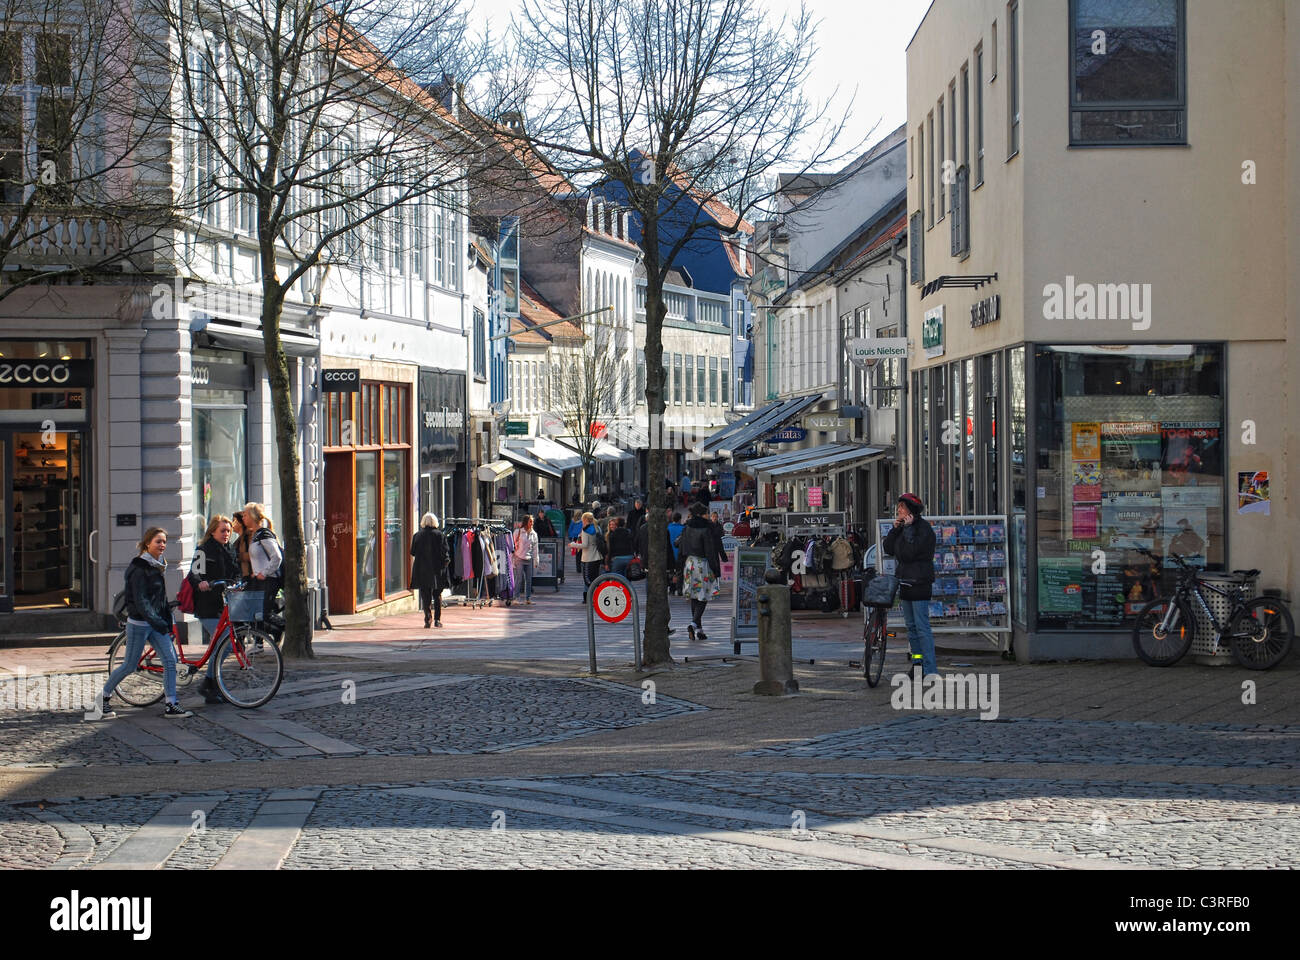 Shopping street/walkway in Kolding, Denmark Stock Photo - Alamy